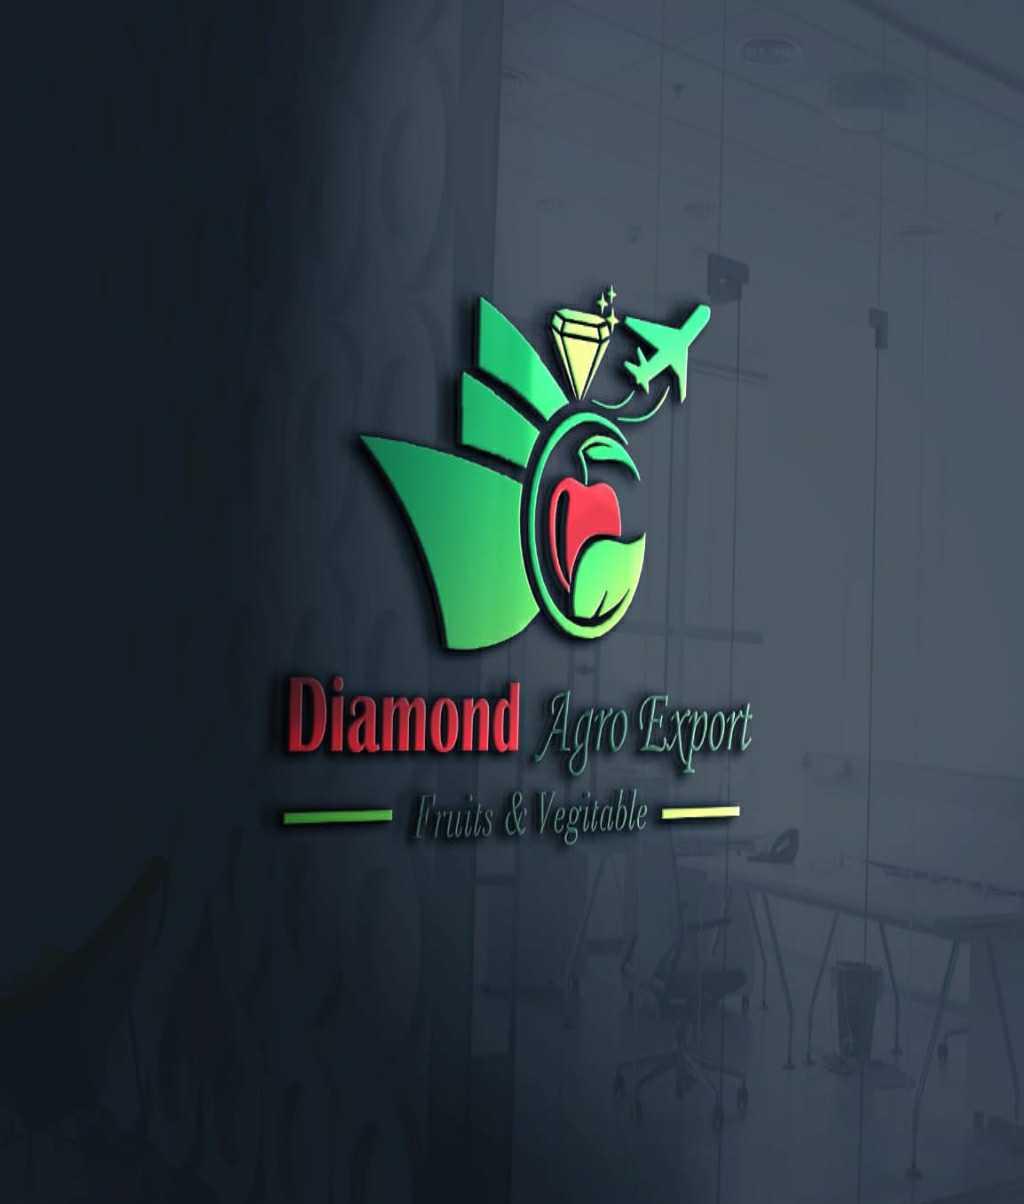 DIAMOND AGRO EXPORT